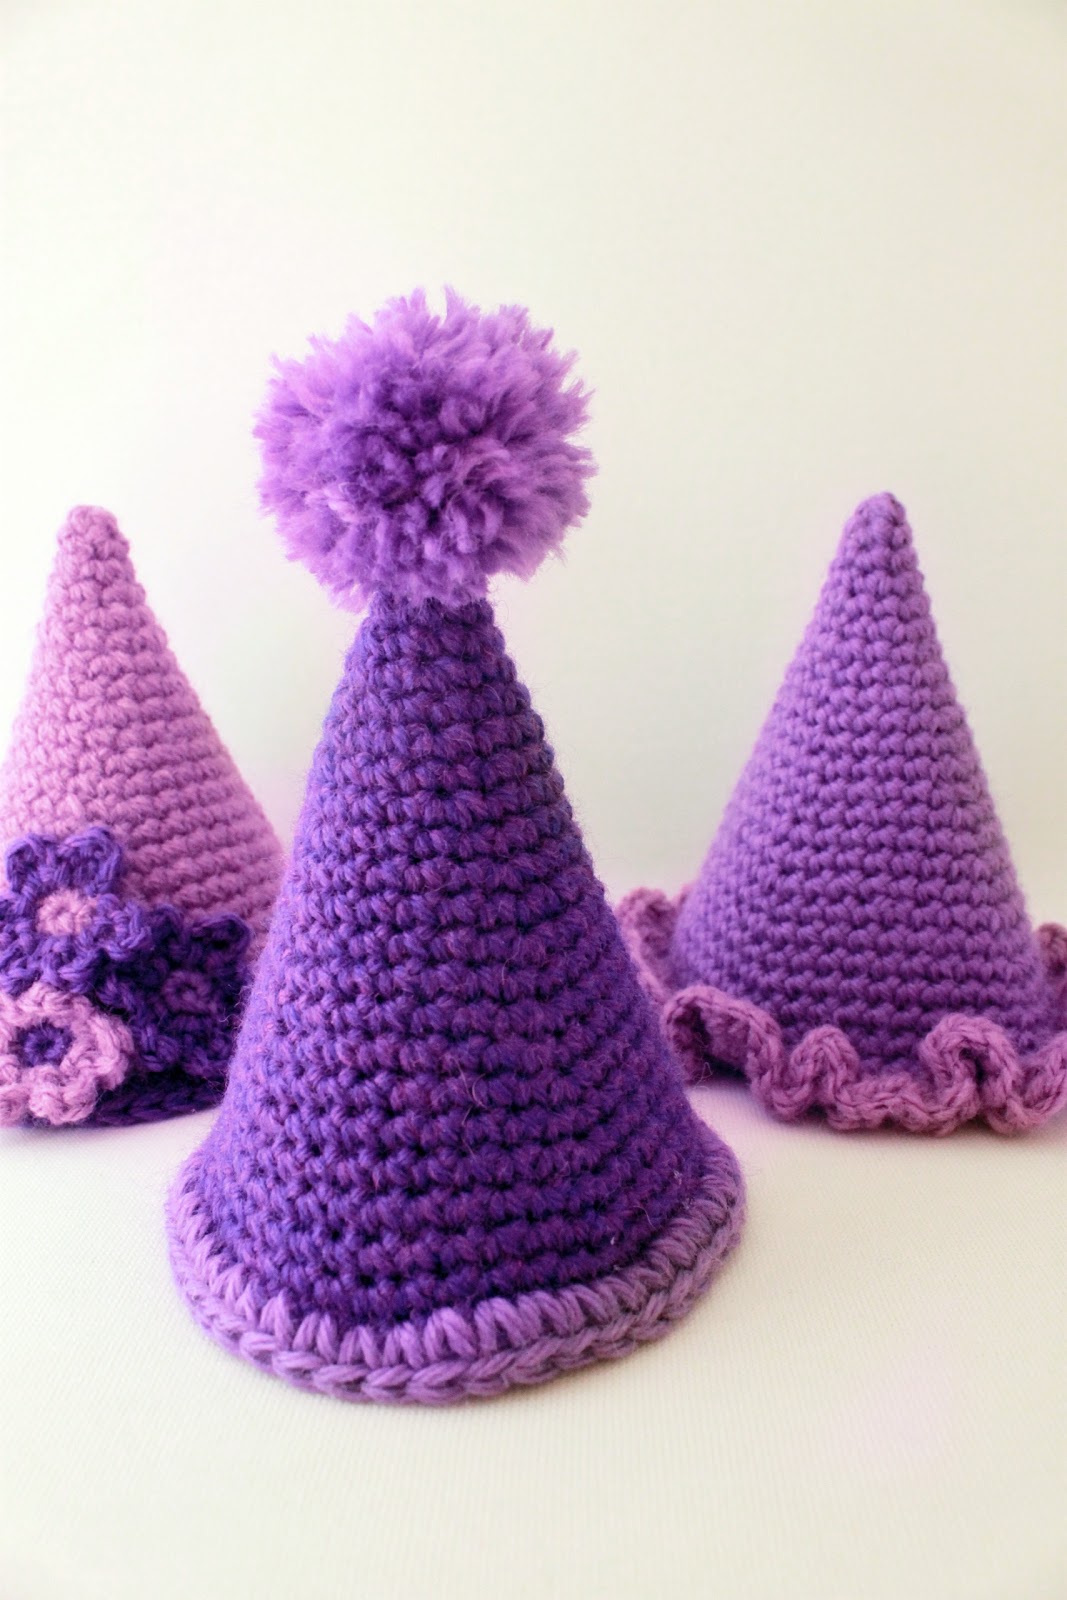 20+ Crochet Baby Blanket Patterns: {Free} : TipNut.com